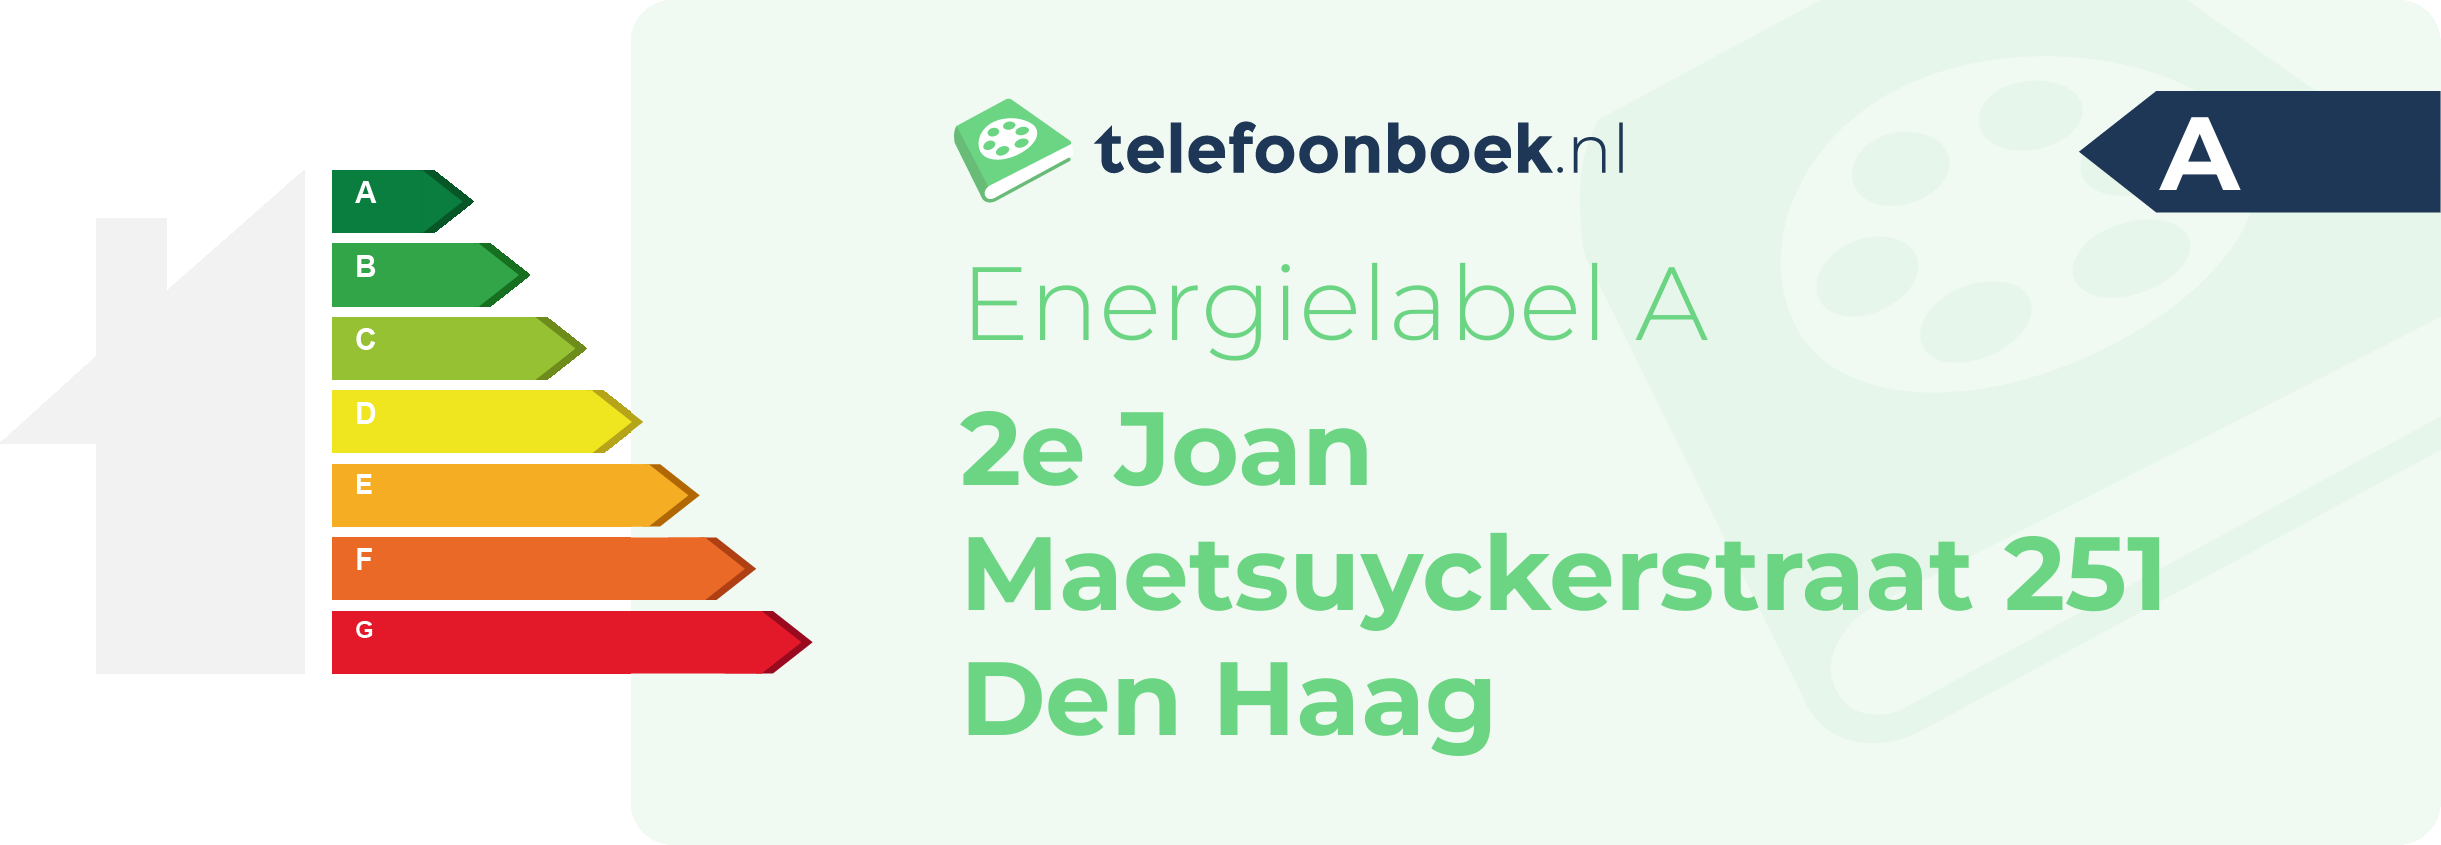 Energielabel 2e Joan Maetsuyckerstraat 251 Den Haag